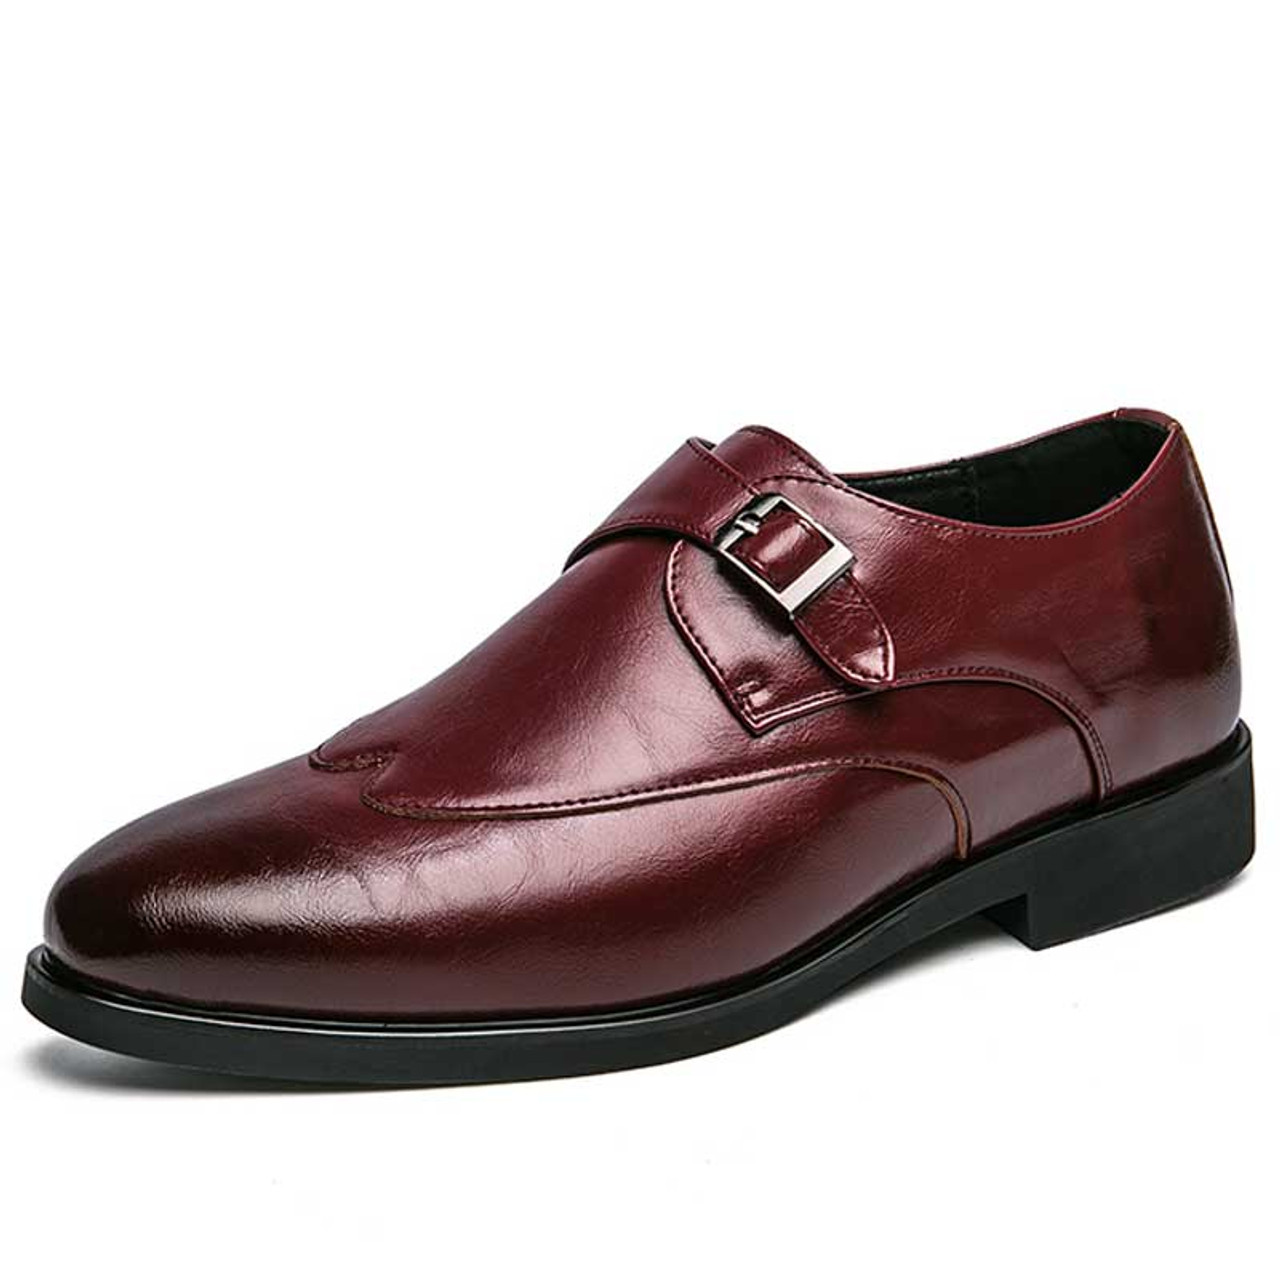 Men's Dress Shoes Online | Free Shipping US, UK, CA, Europe, Japan ...